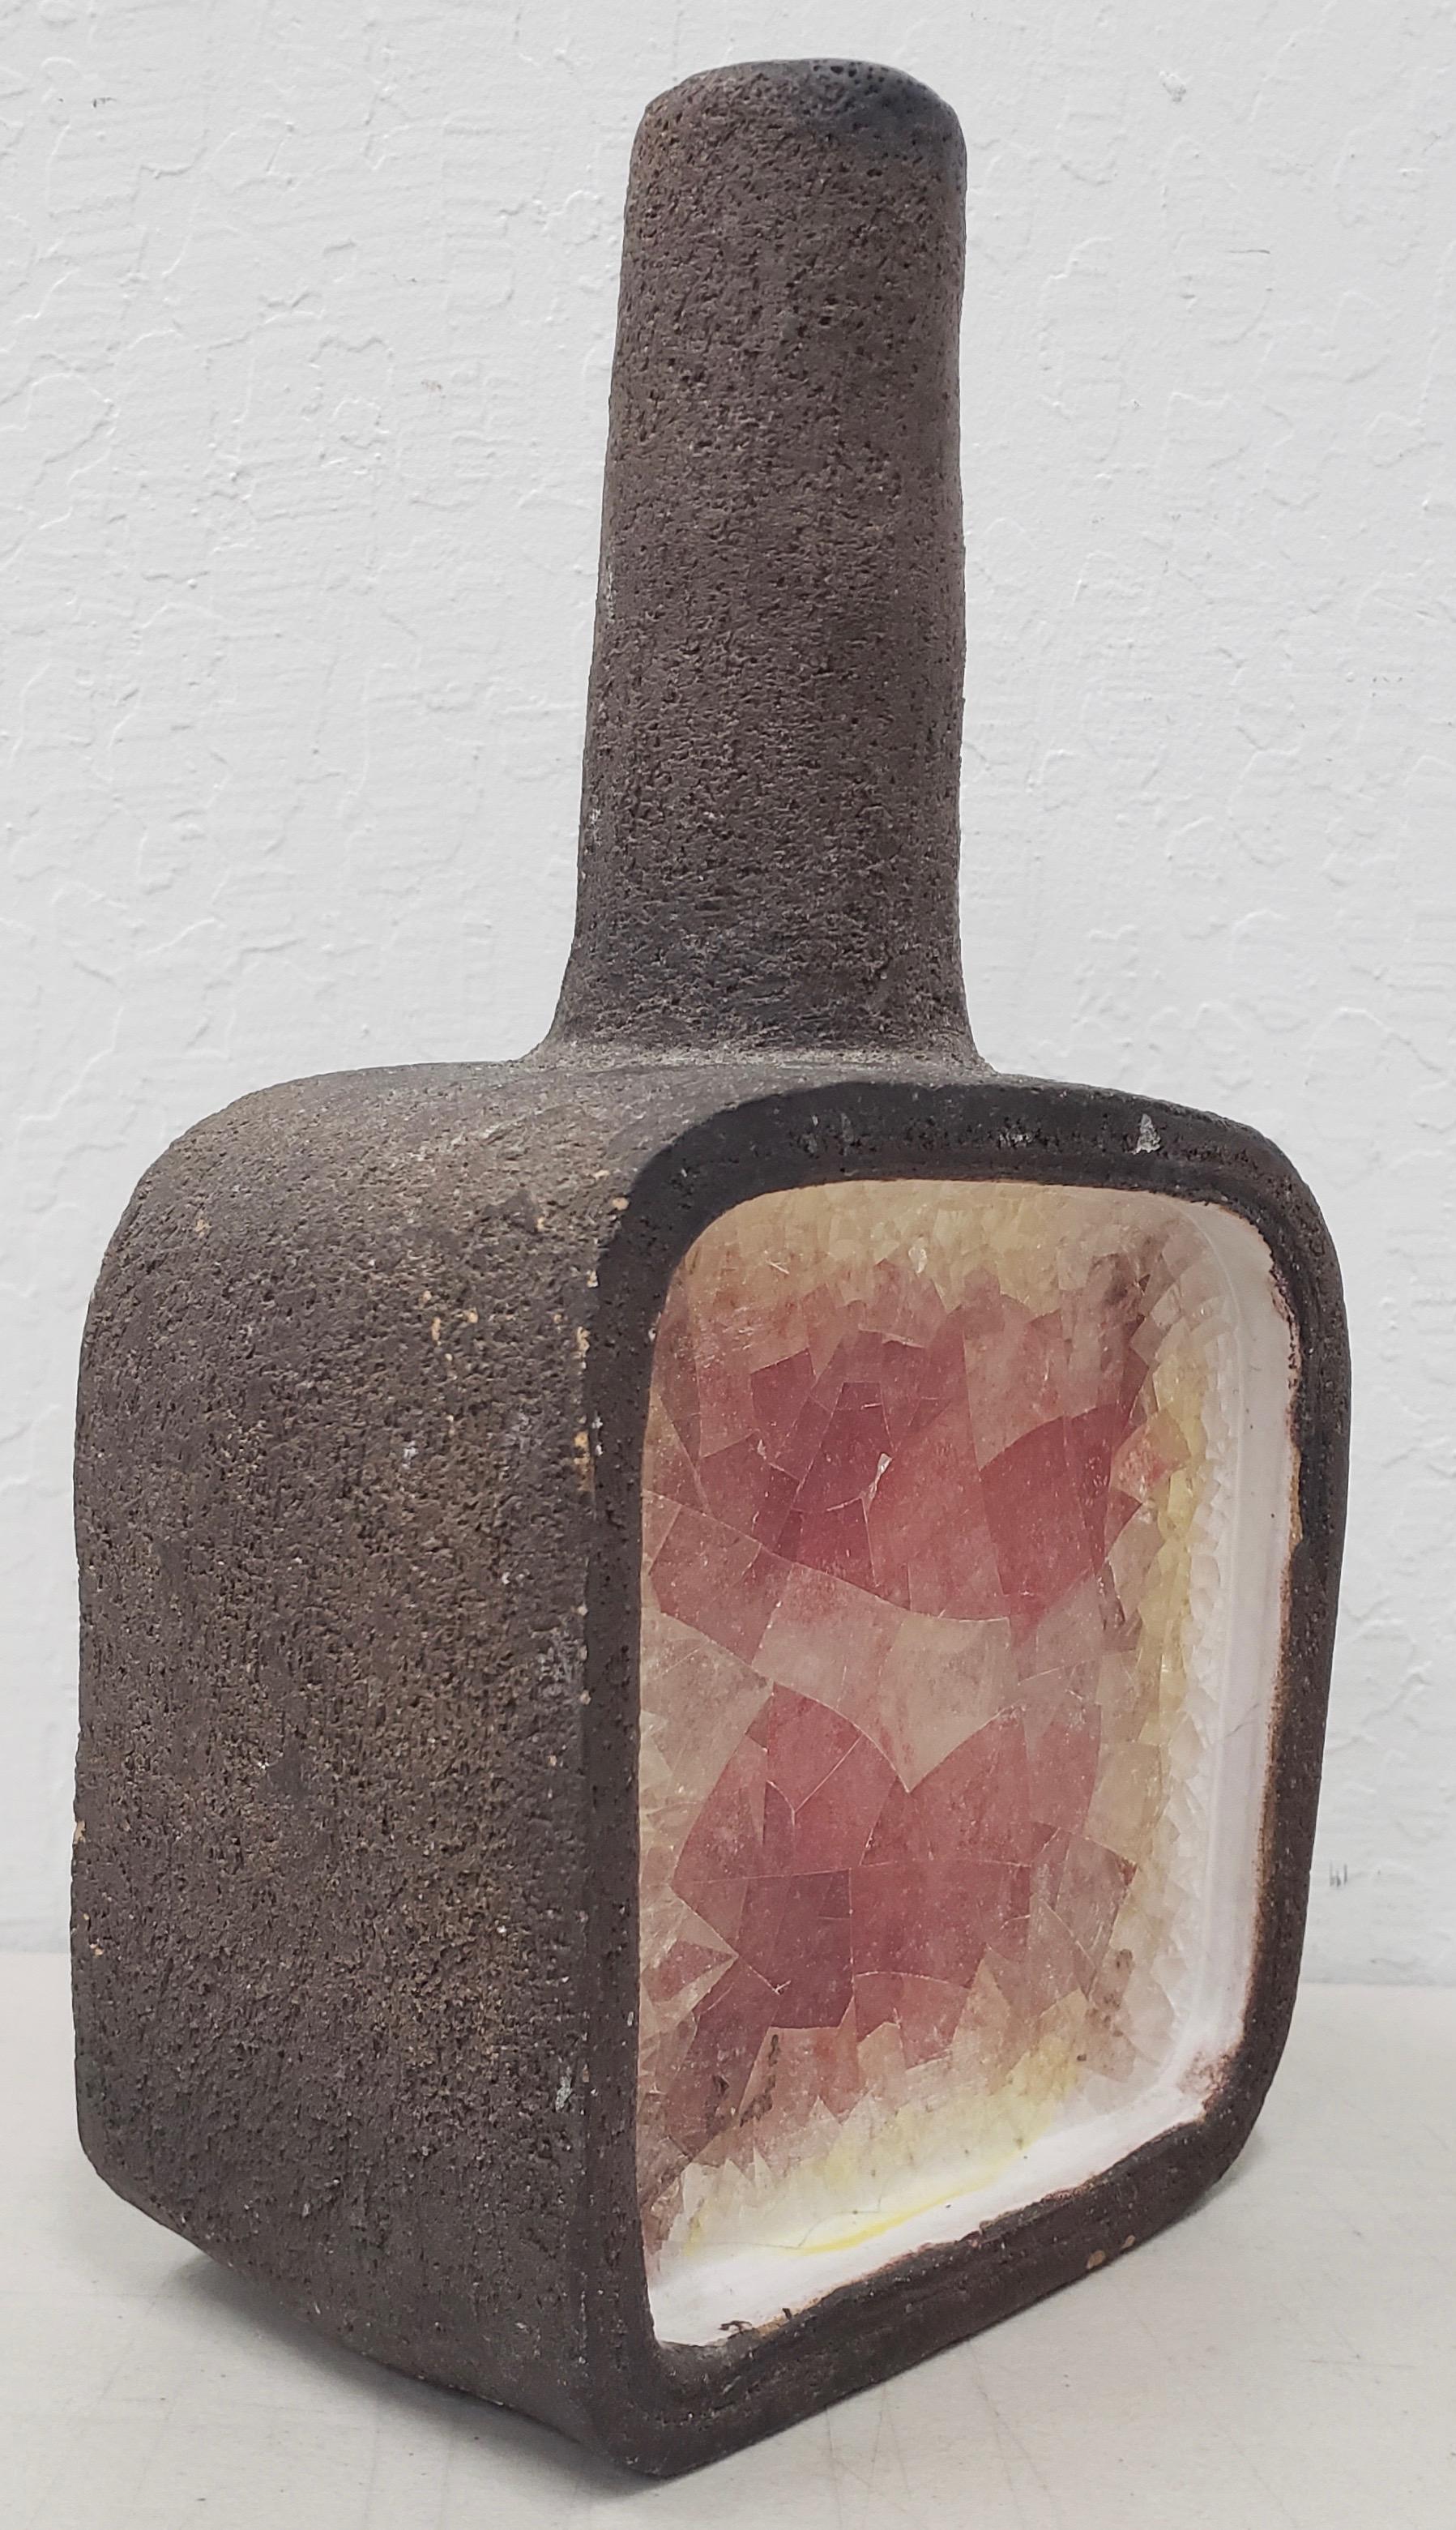 Aldo Londi for Bitossi ceramic and fused glass pottery vase, circa 1950s

Rare ceramic vase with glass front by Italian designer Aldo Londi for Bitossi.

Dimensions 7